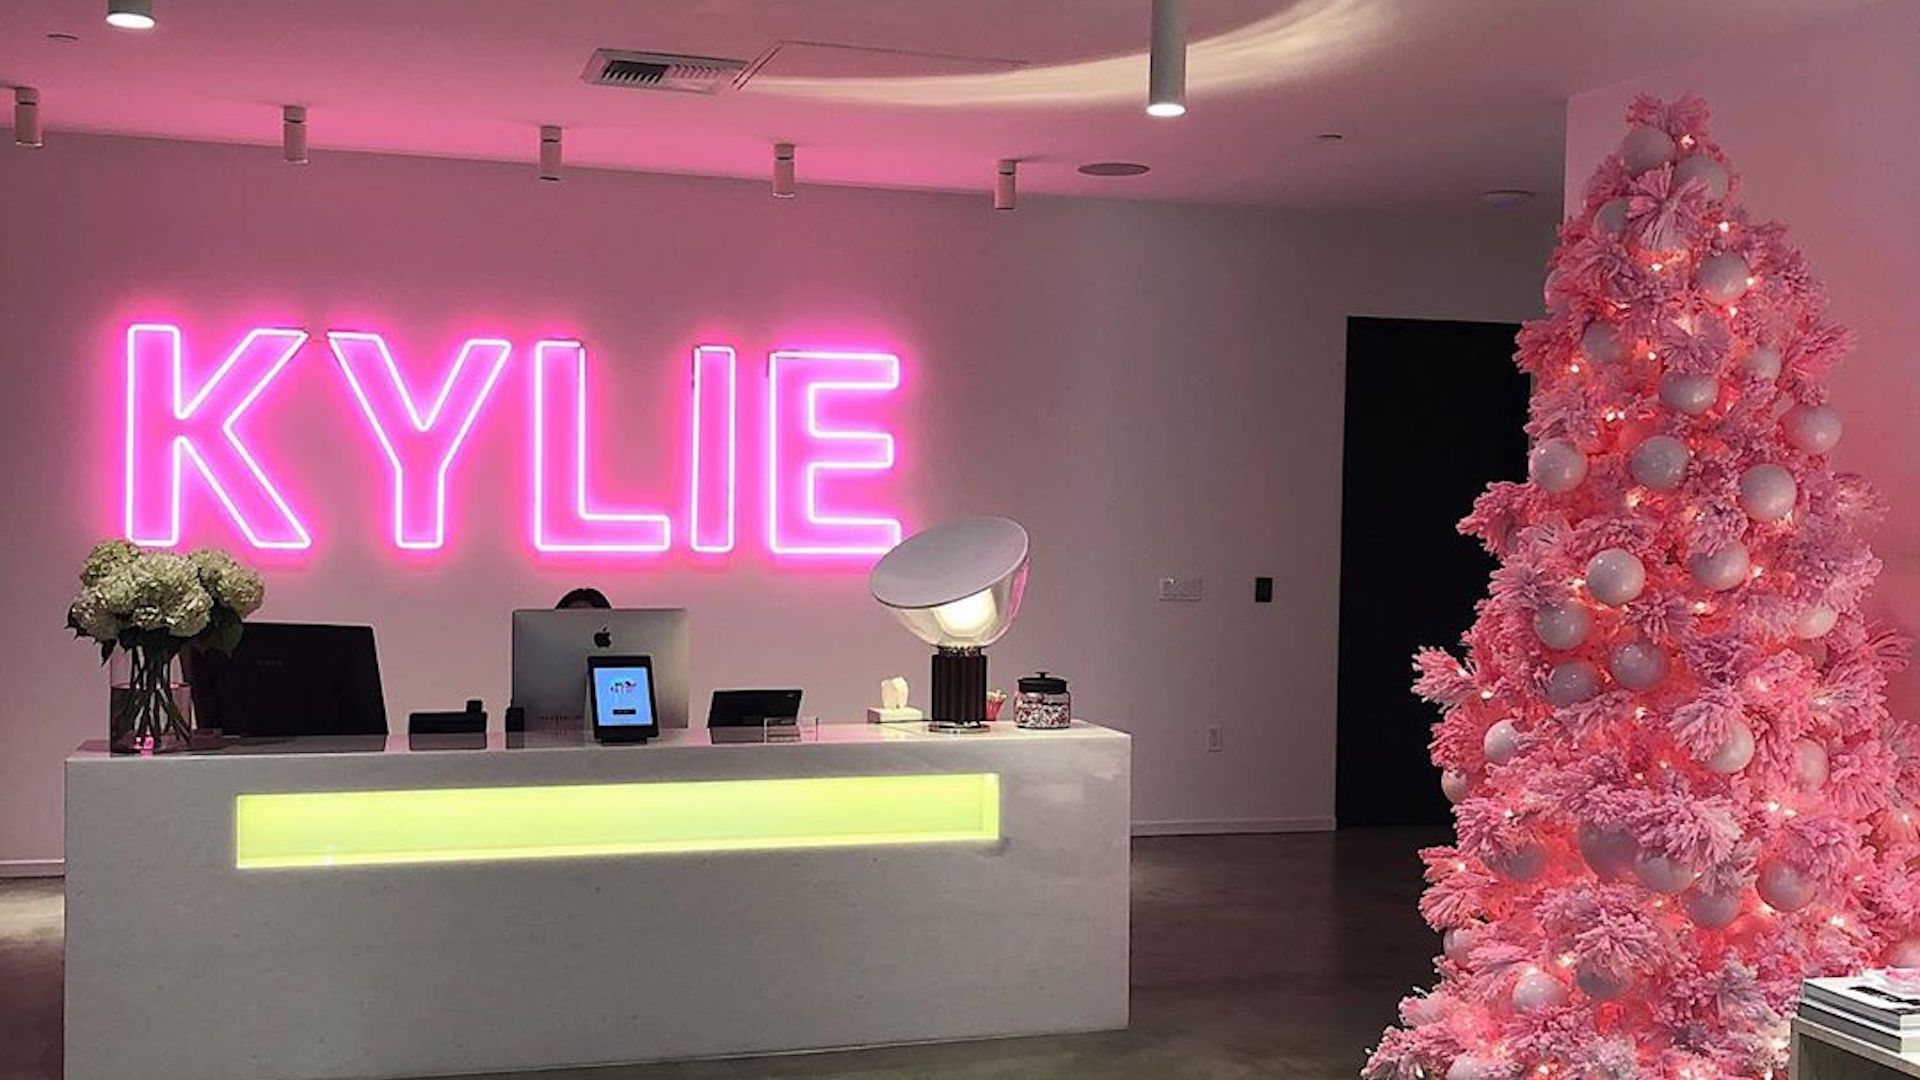 Kylie in pink neon lights